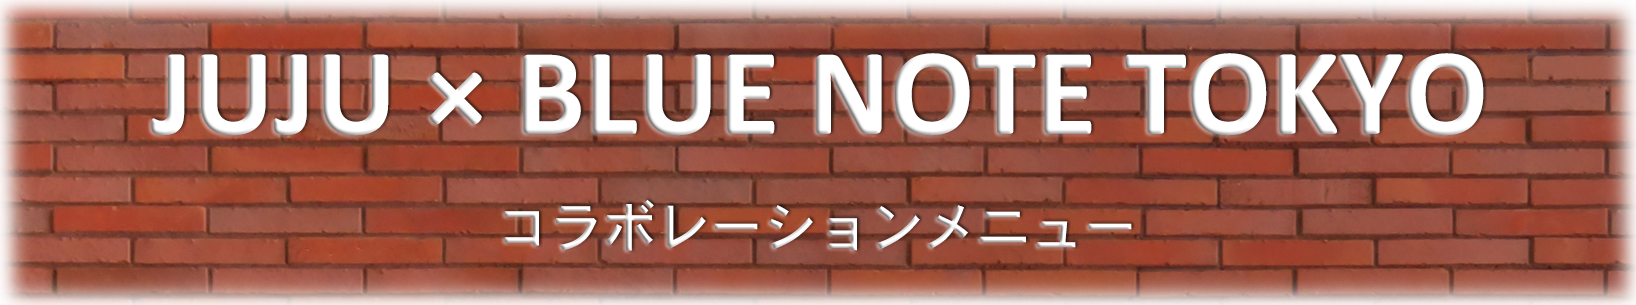 JUJU × BLUE NOTE TOKYO コラボレーションメニュー